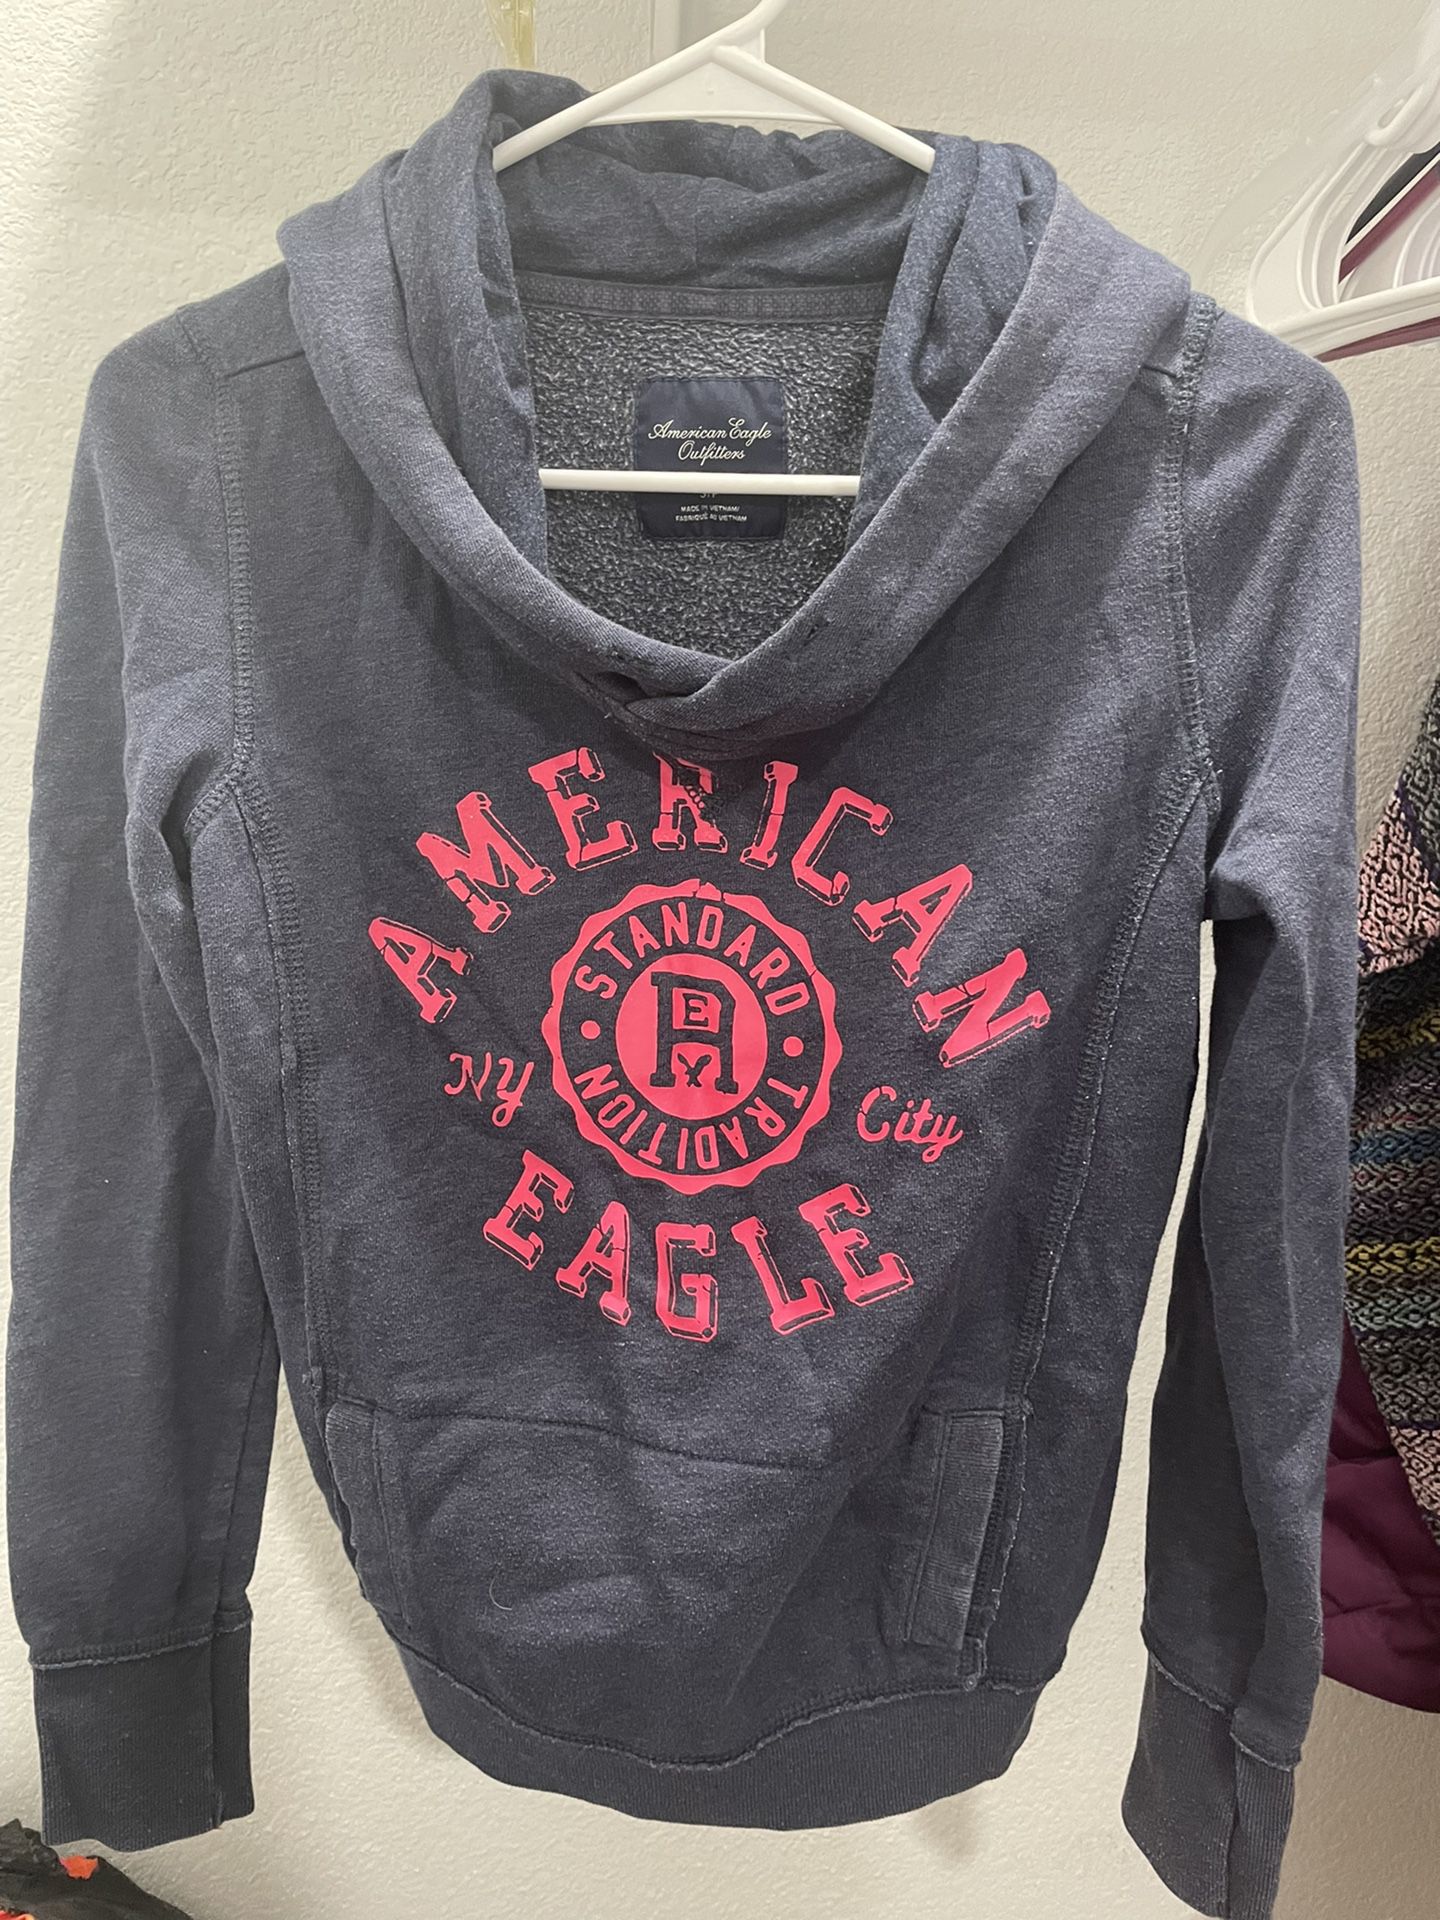 American Eagle Sweater $5.00